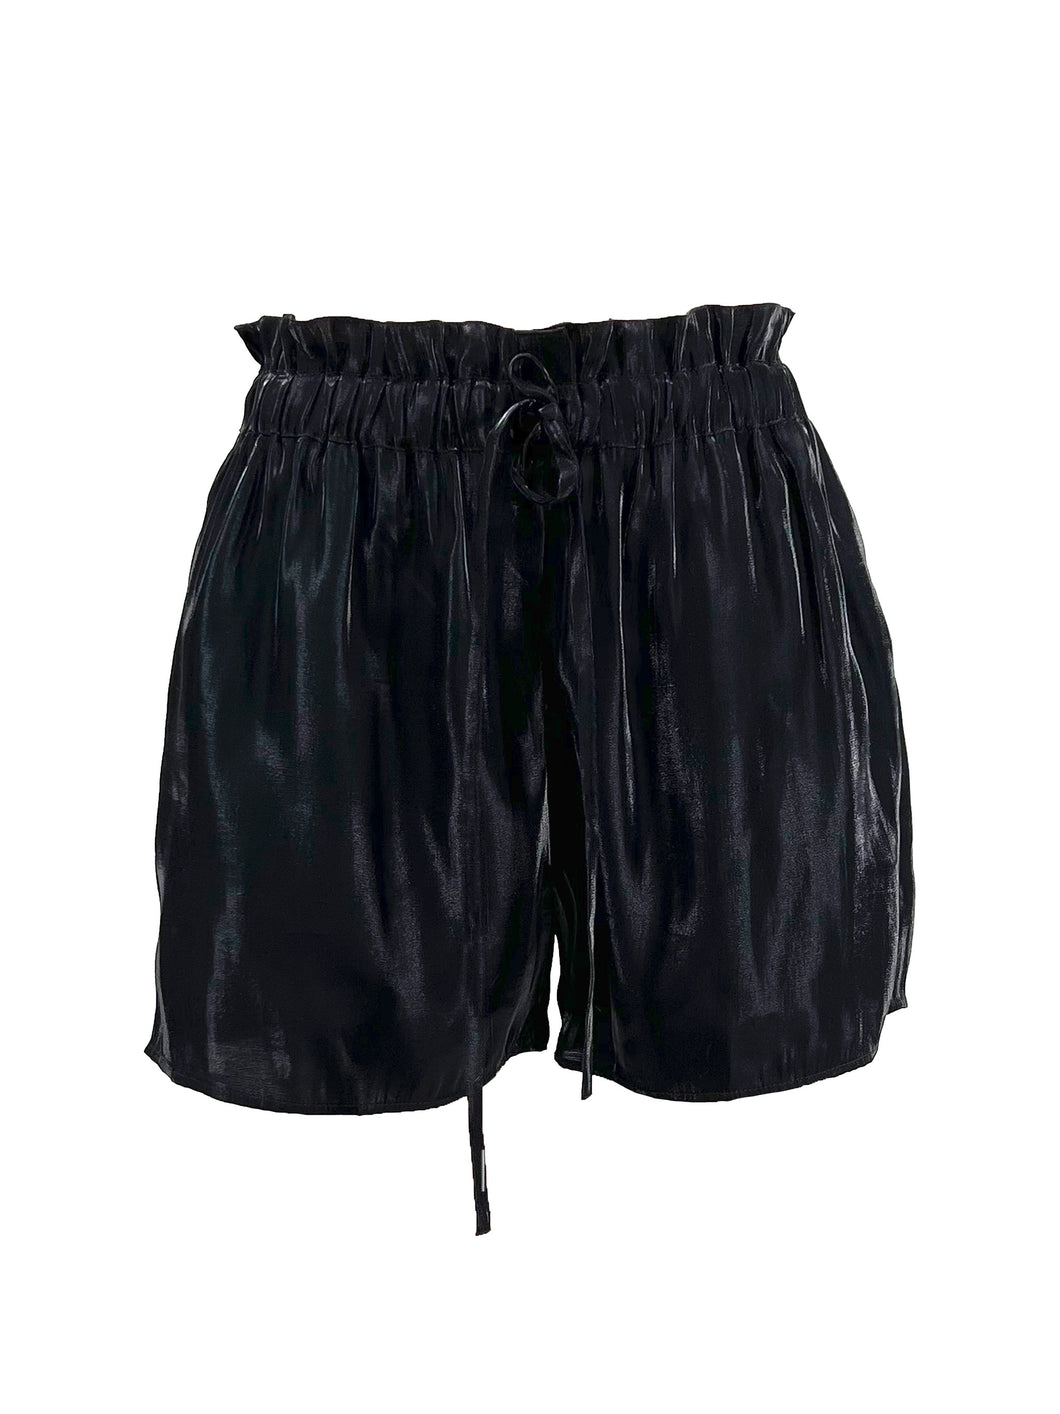 Iridescent Shorts - Black